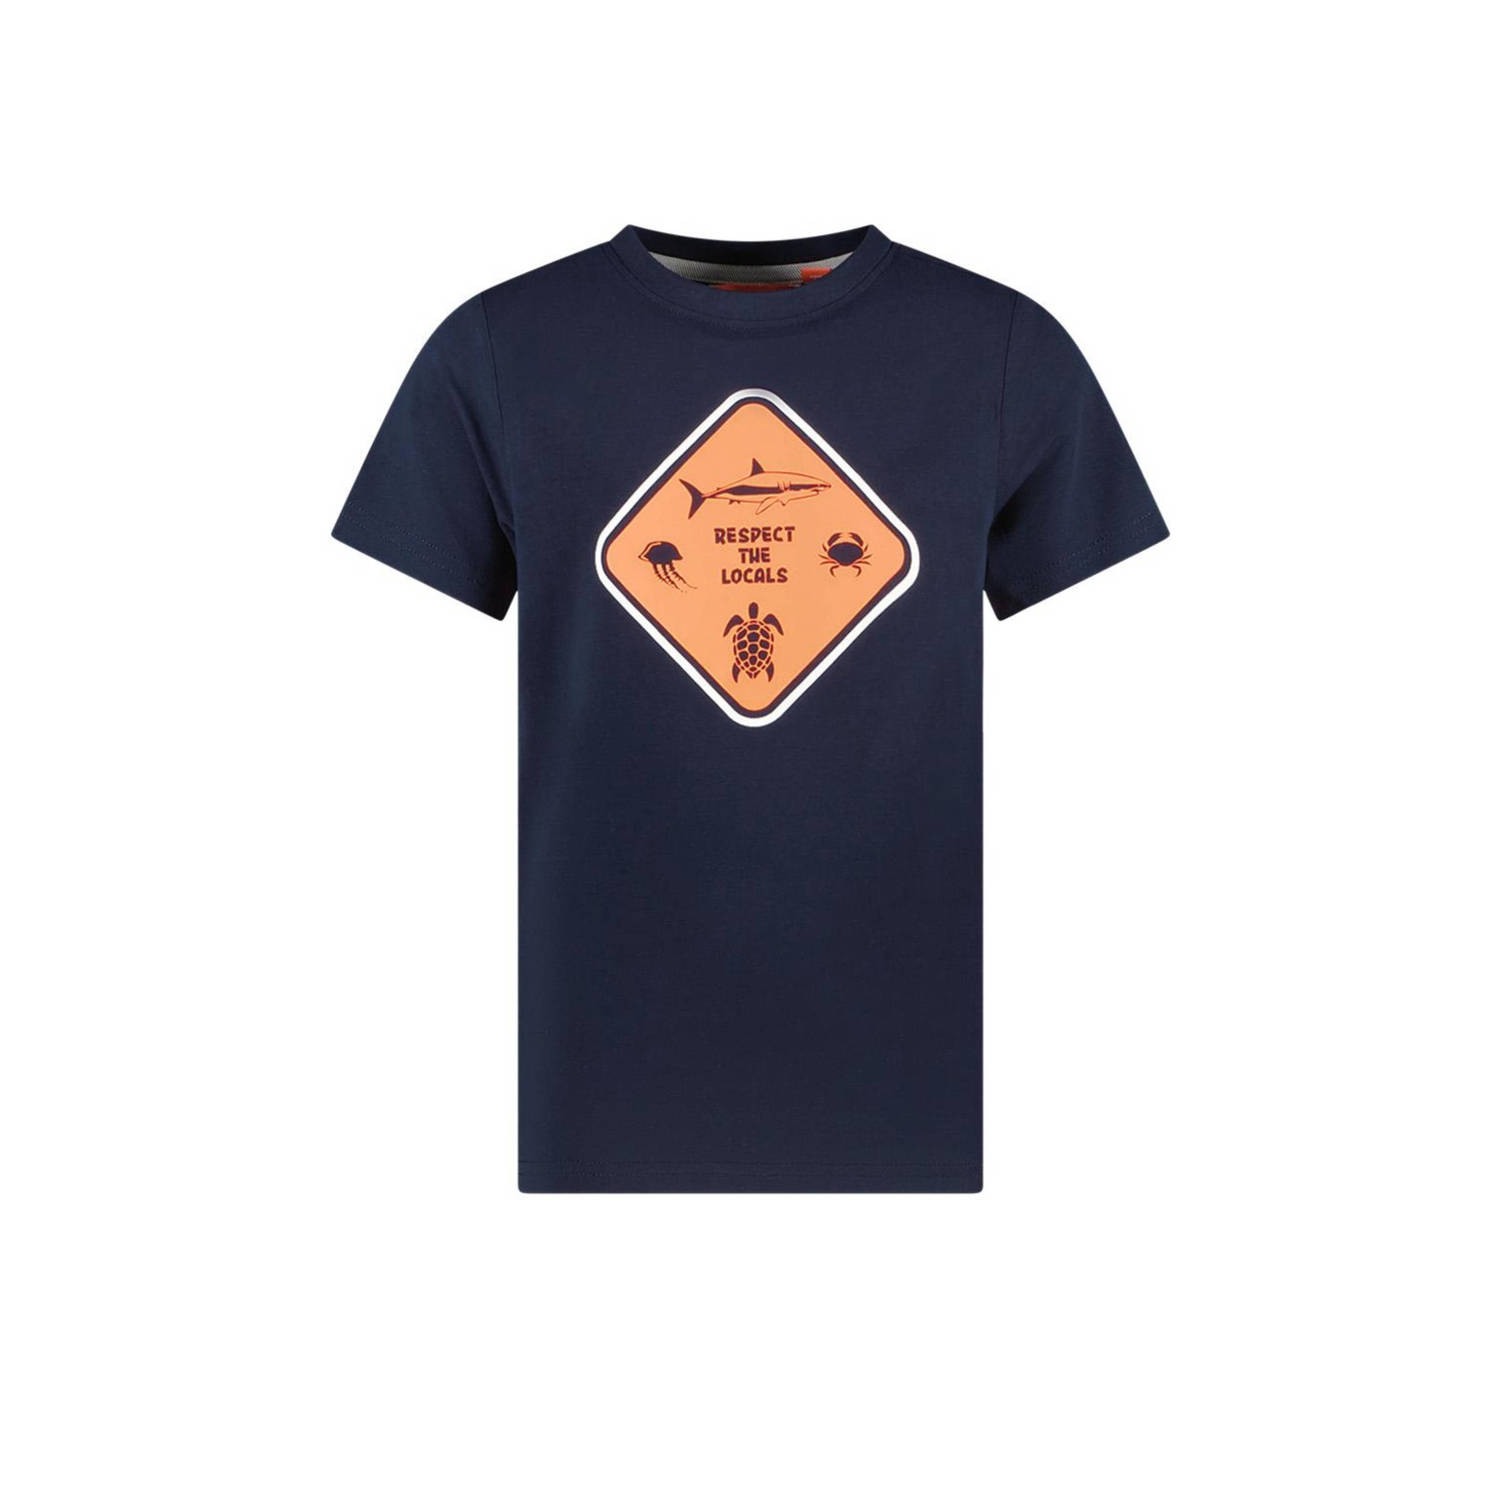 TYGO & vito T-shirt Wessel met printopdruk donkerblauw oranje